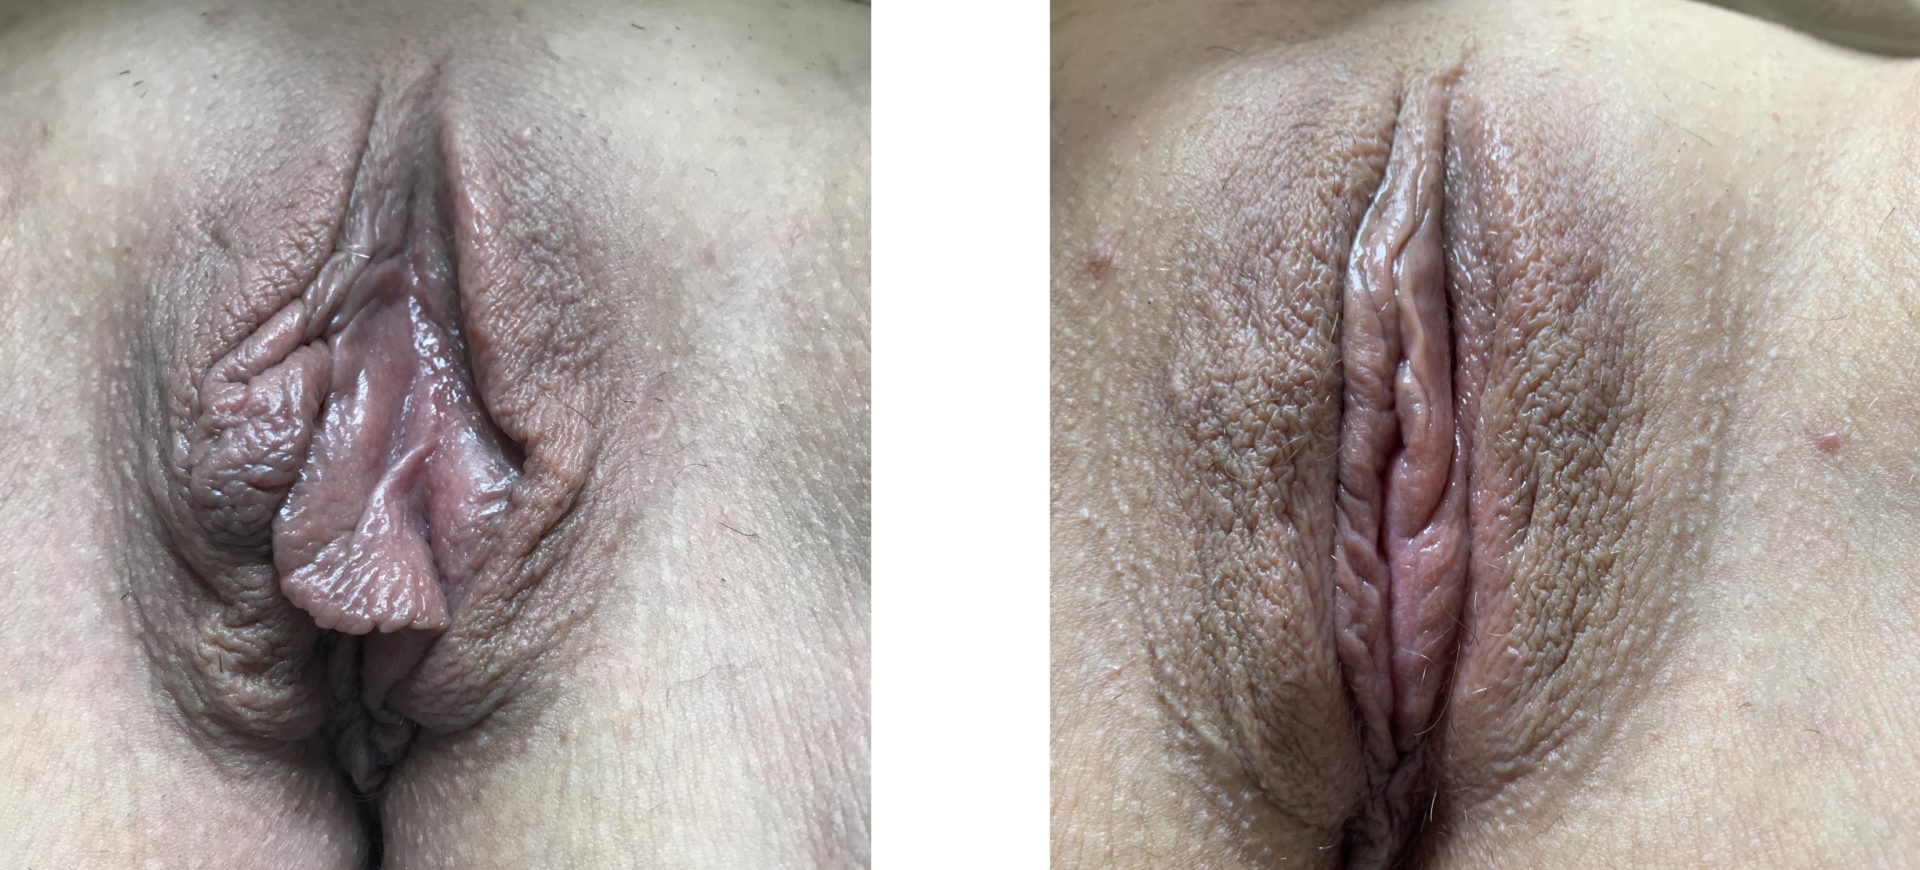 Labiaplasty Minora